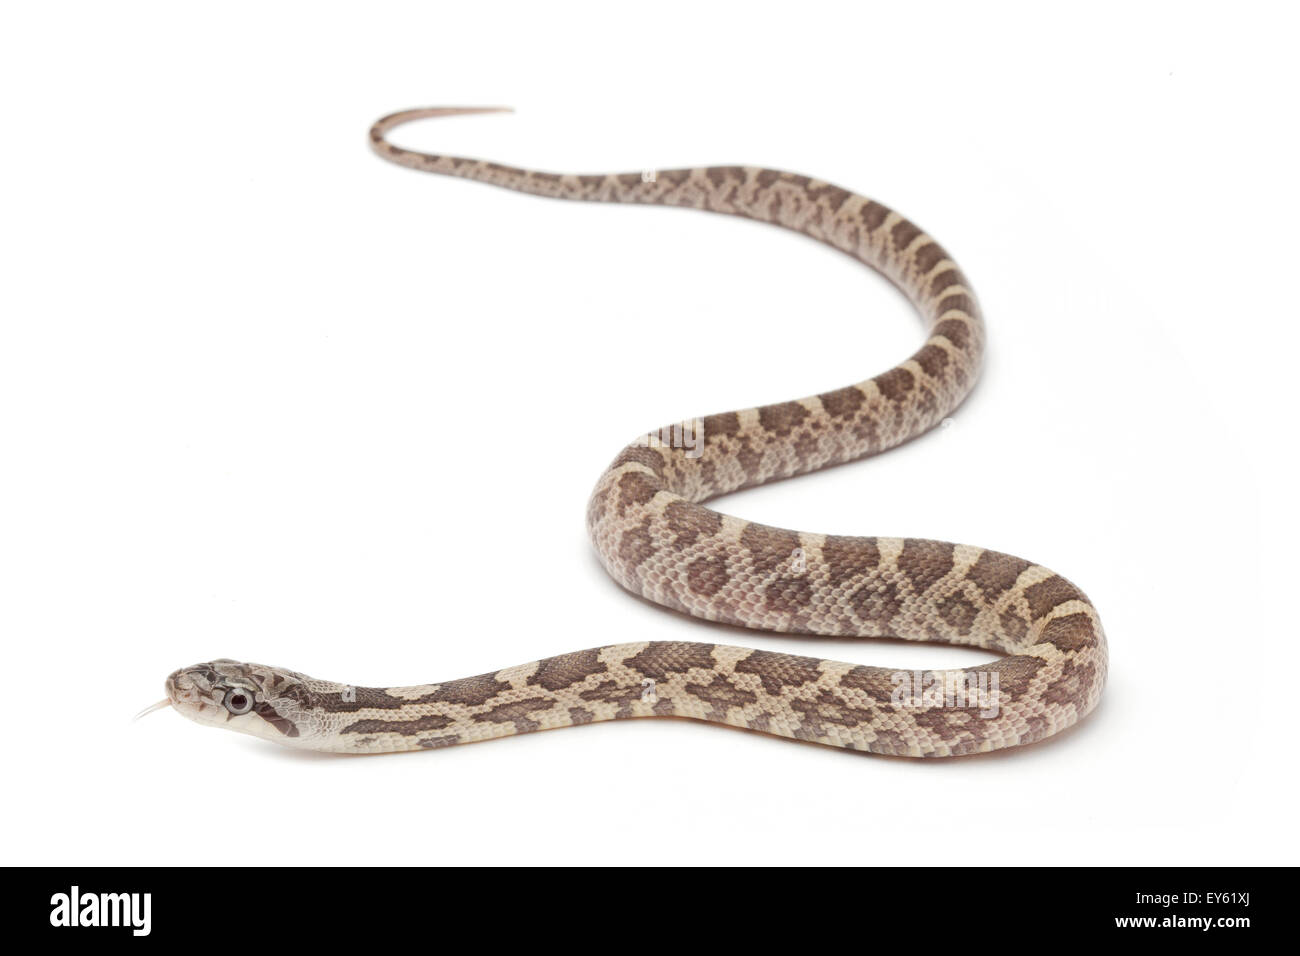 Texas rat snake 'Lavender' on white background Stock Photo